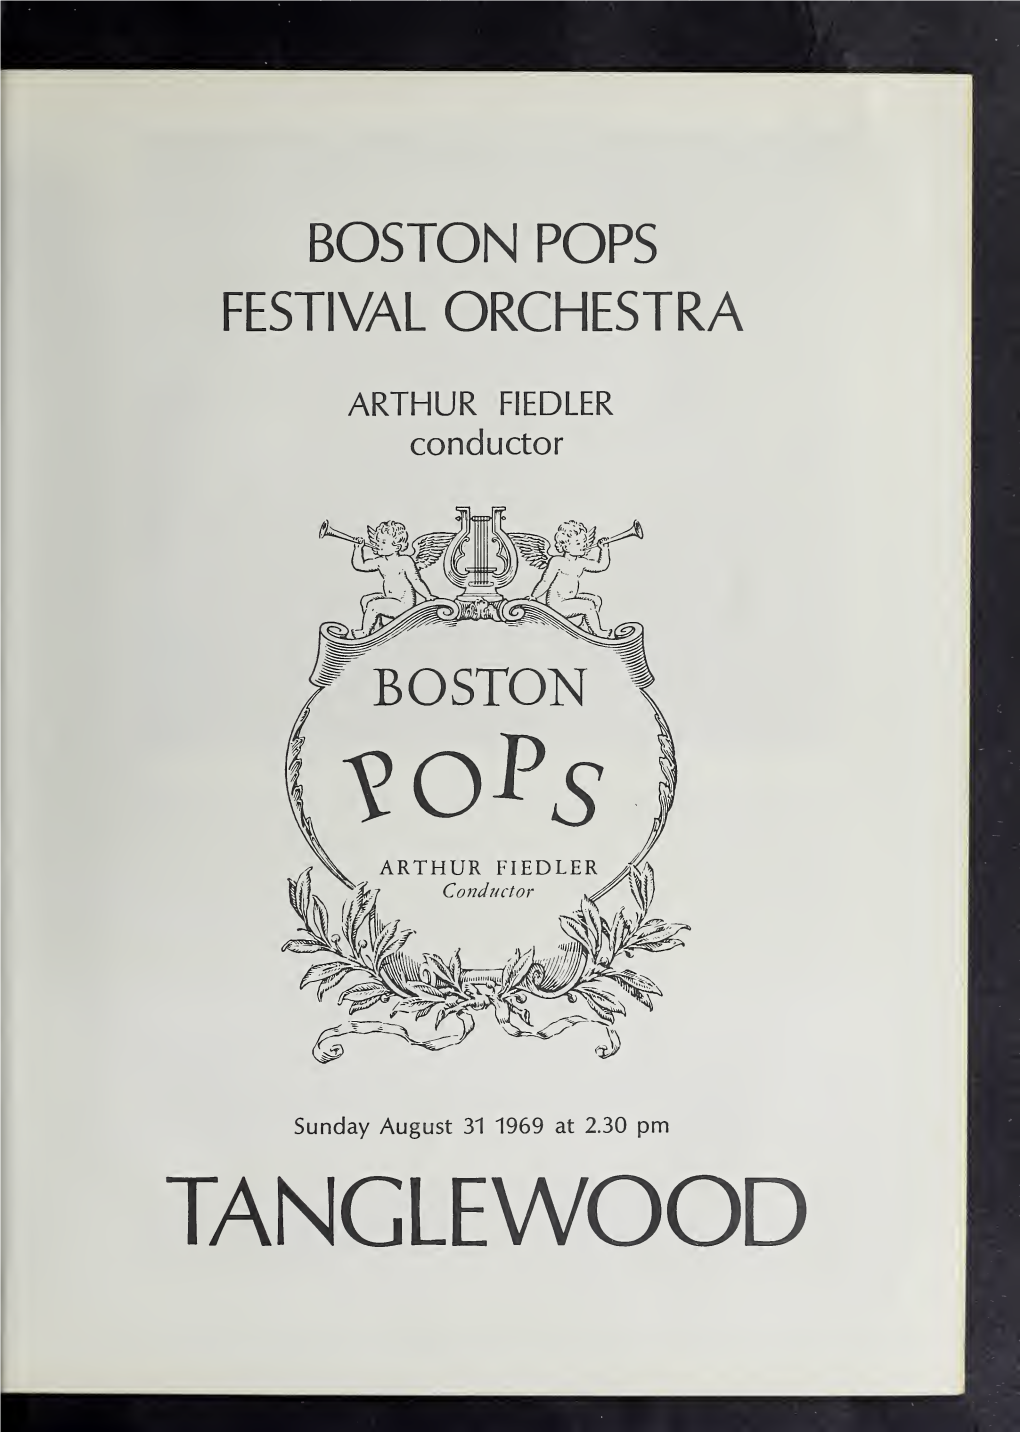 Boston Symphony Orchestra Concert Programs, Summer, 1969